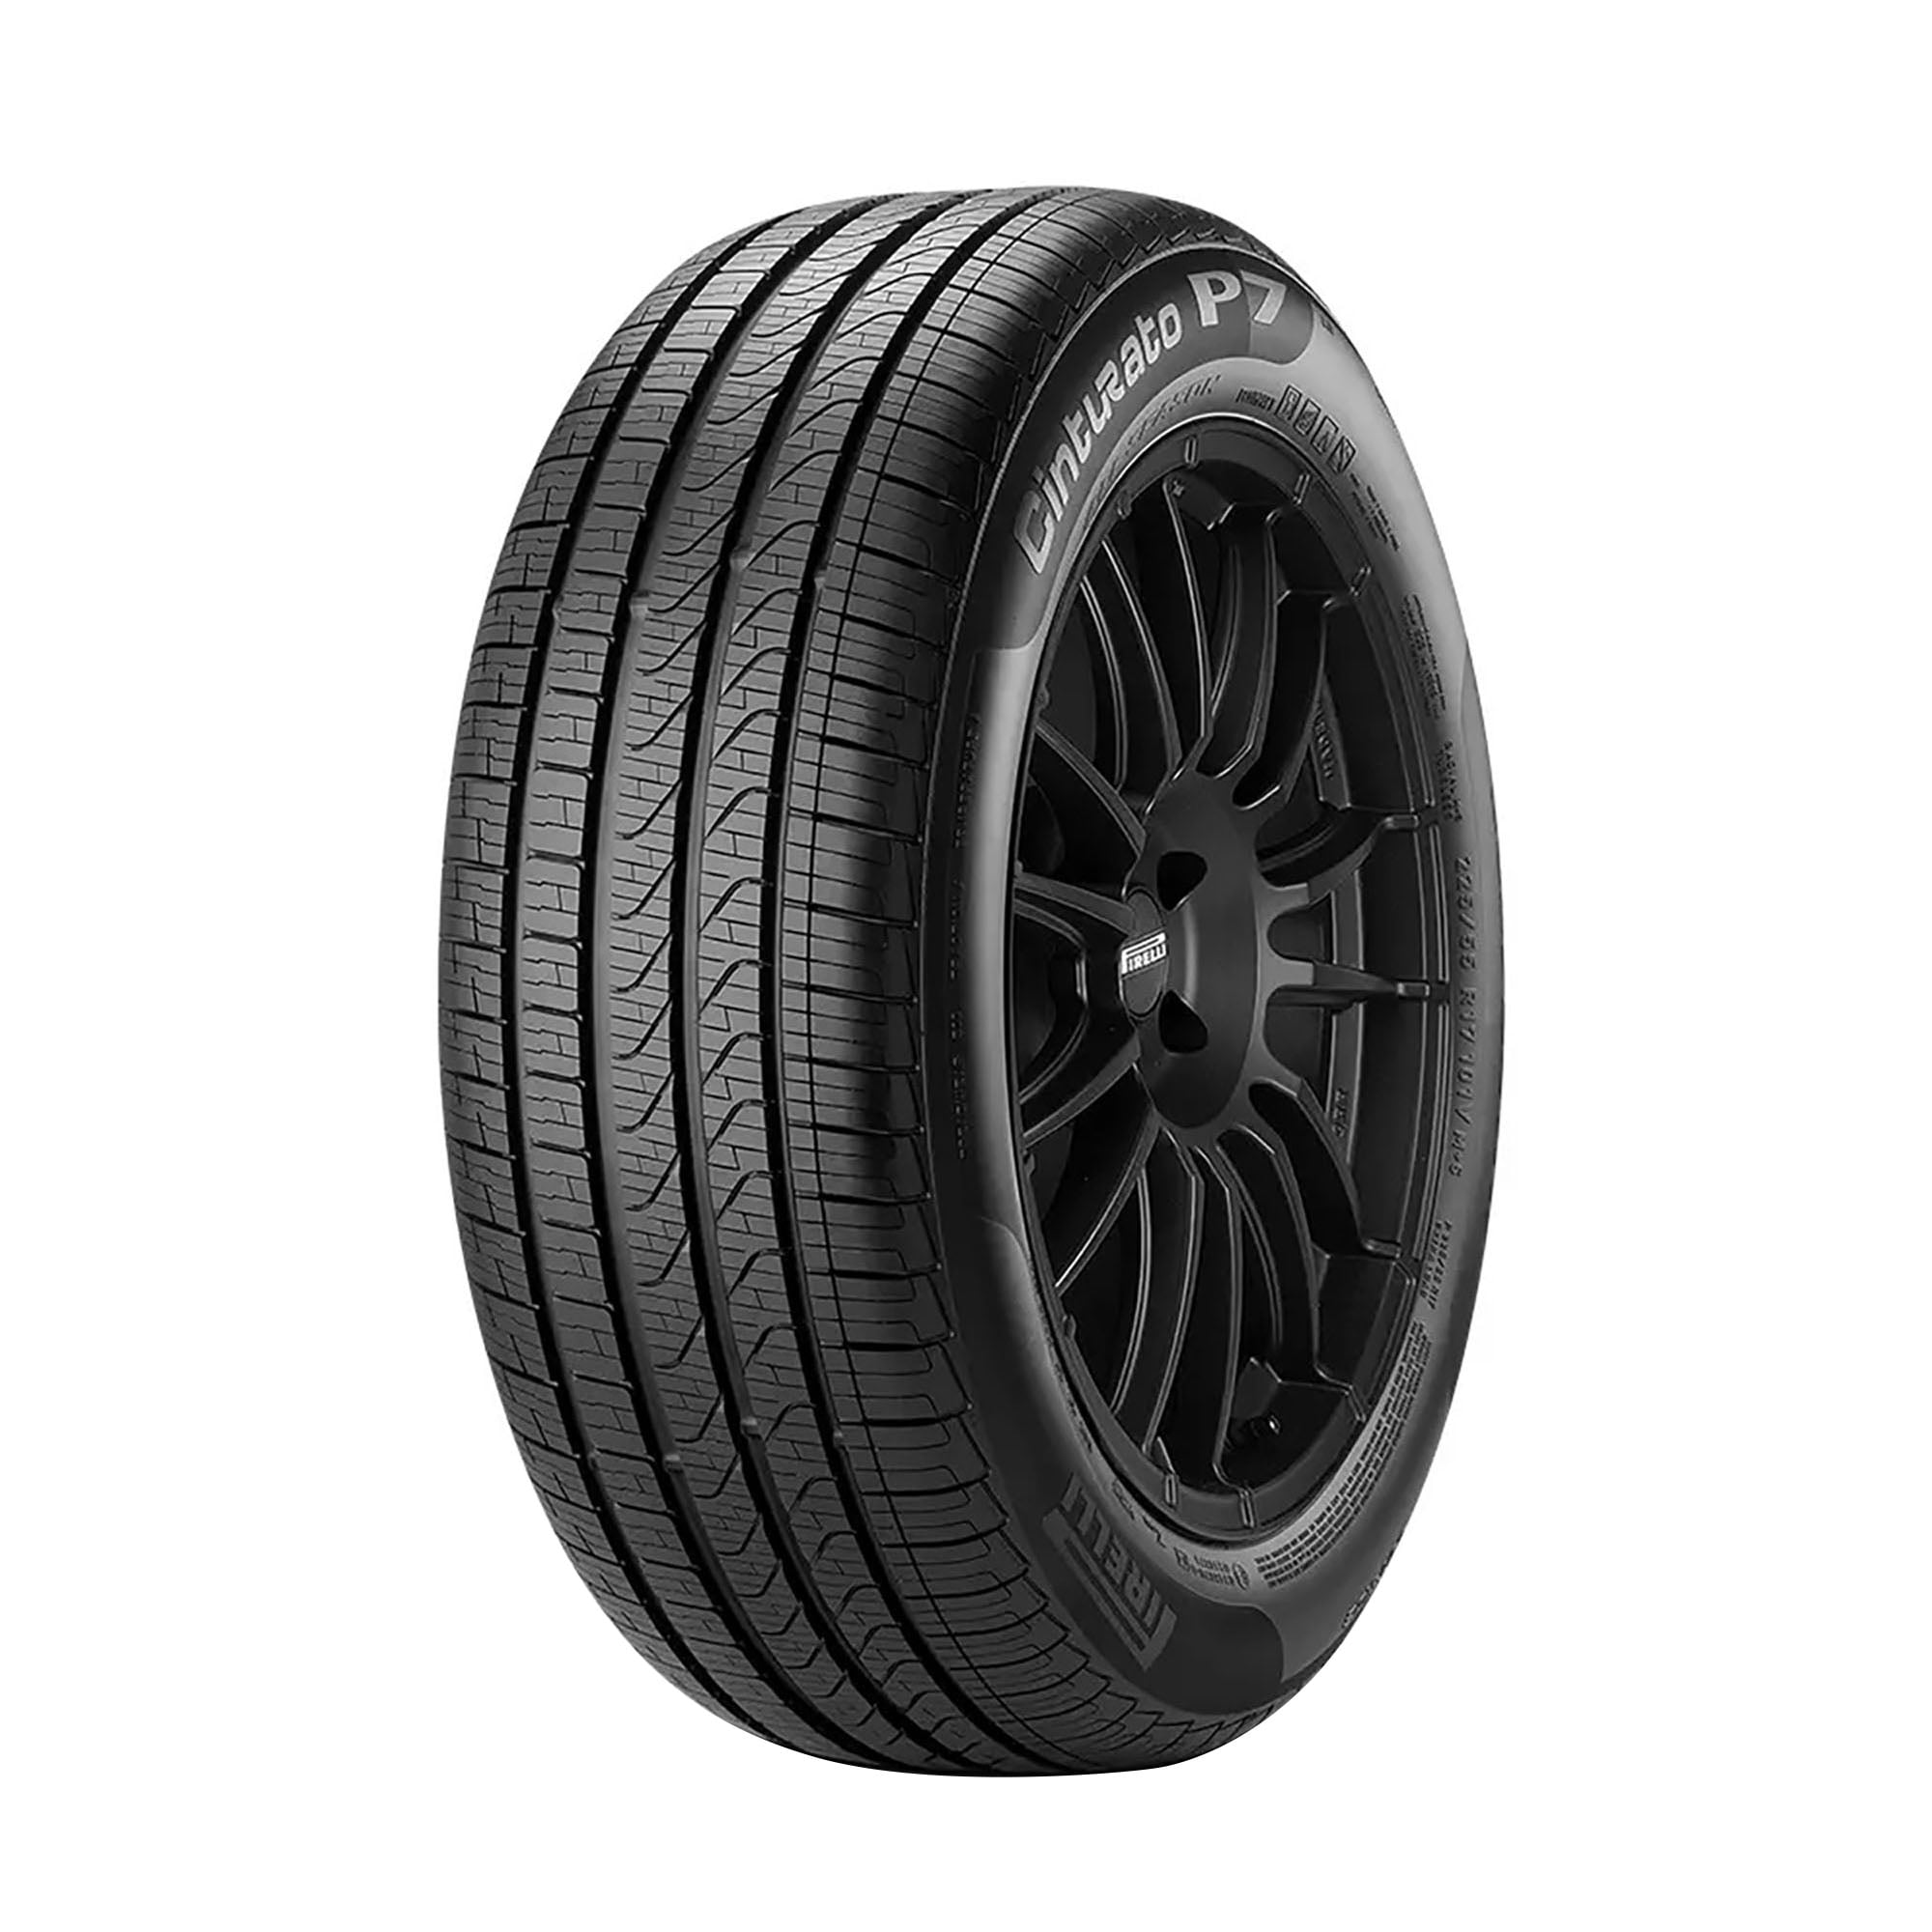 Pirelli Cinturato P7 All Season 205/45R17 88V XL Passenger Tire